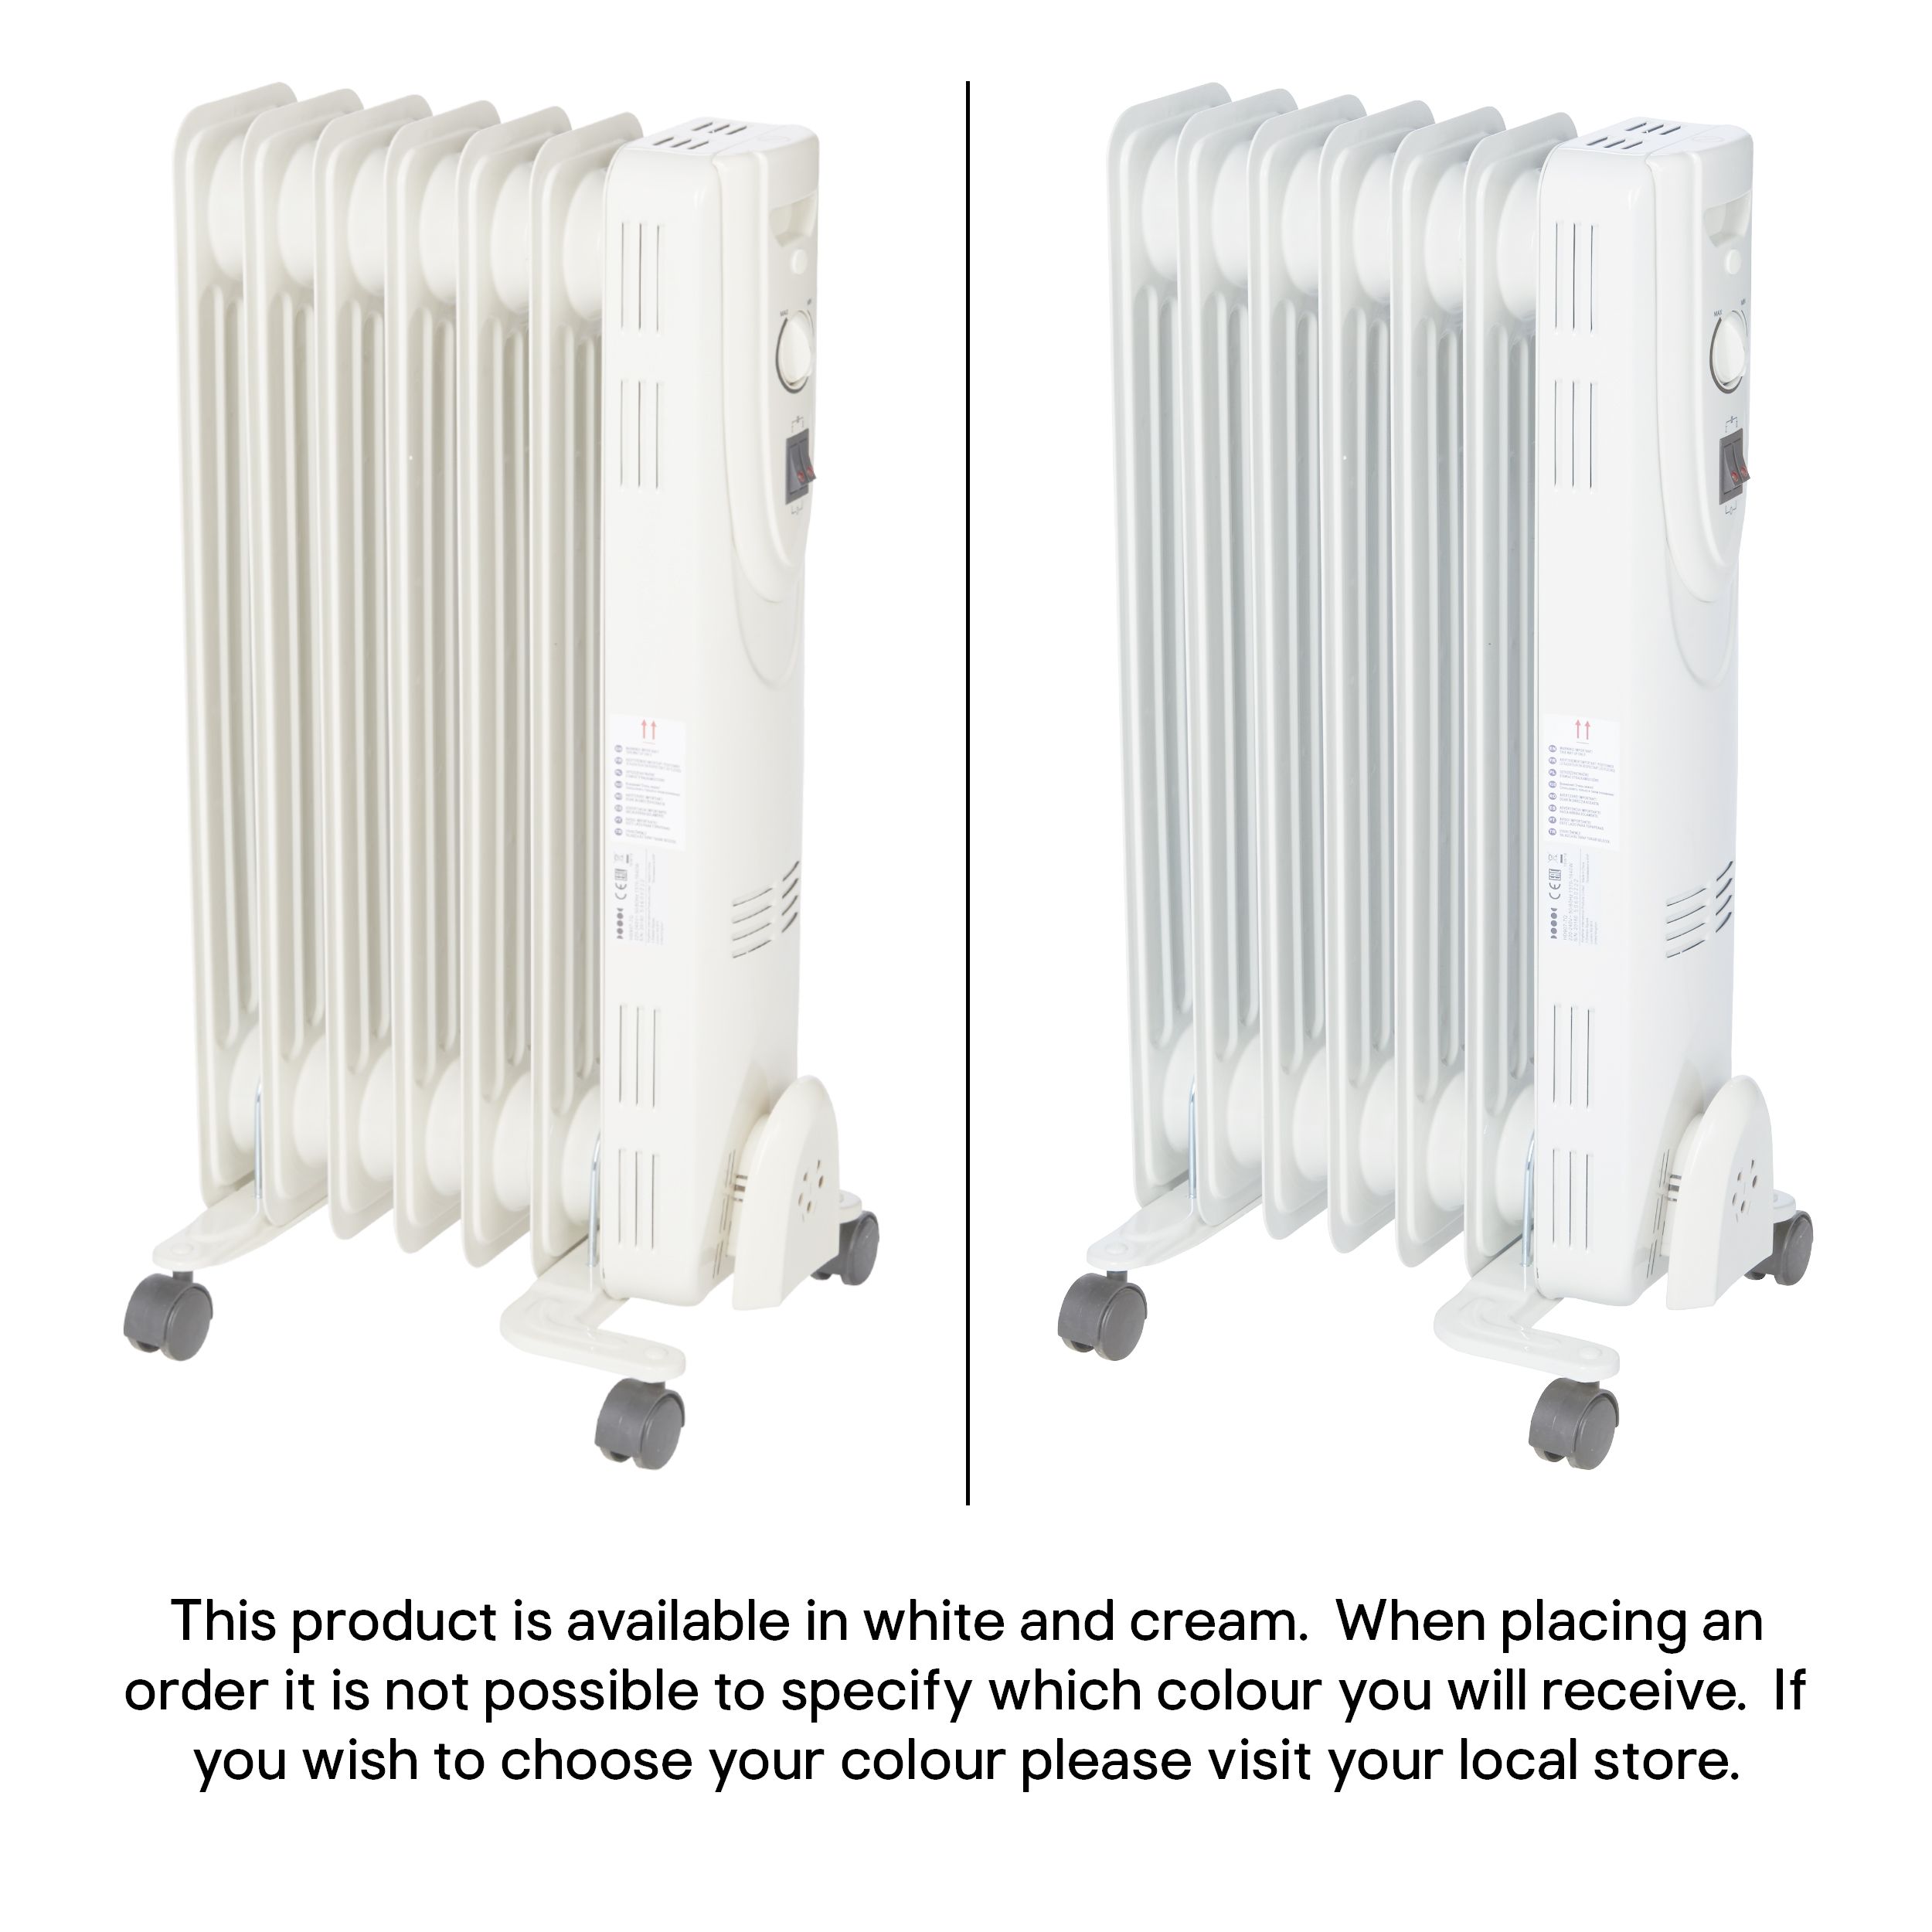 1500W Off-White Oil-filled radiator